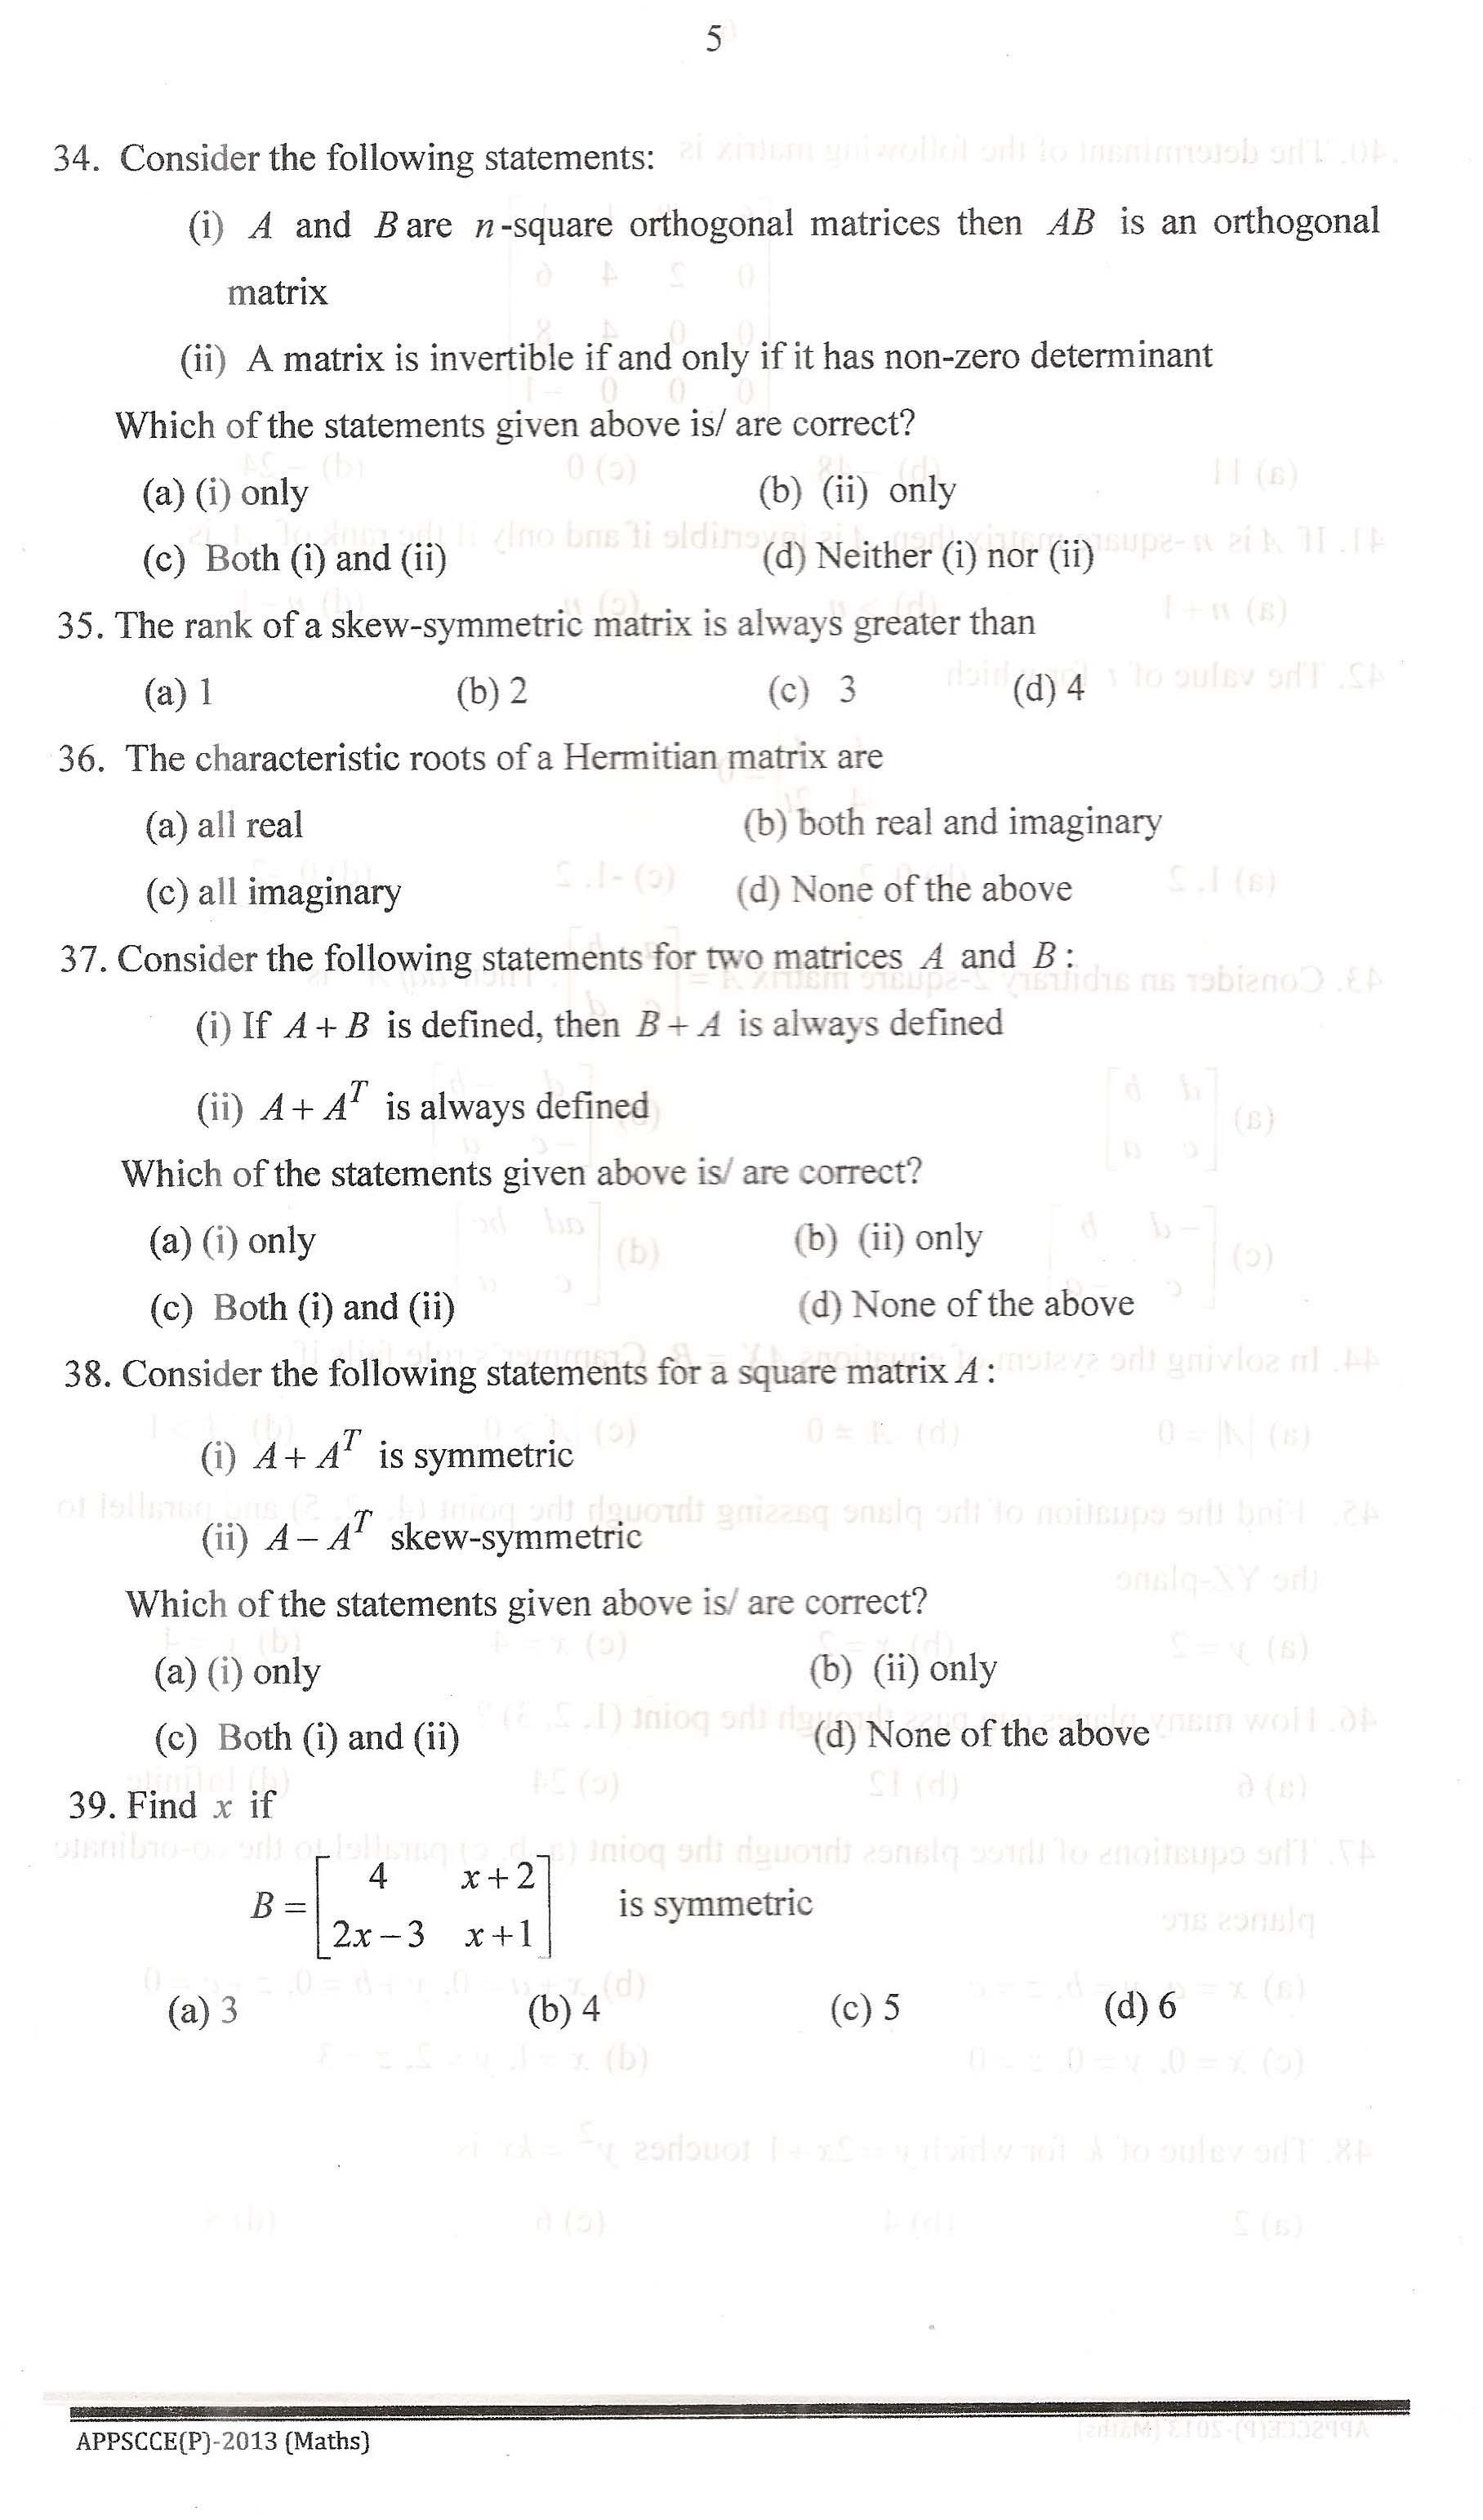 APPSC Combined Competitive Prelims Exam 2013 Mathematics 6